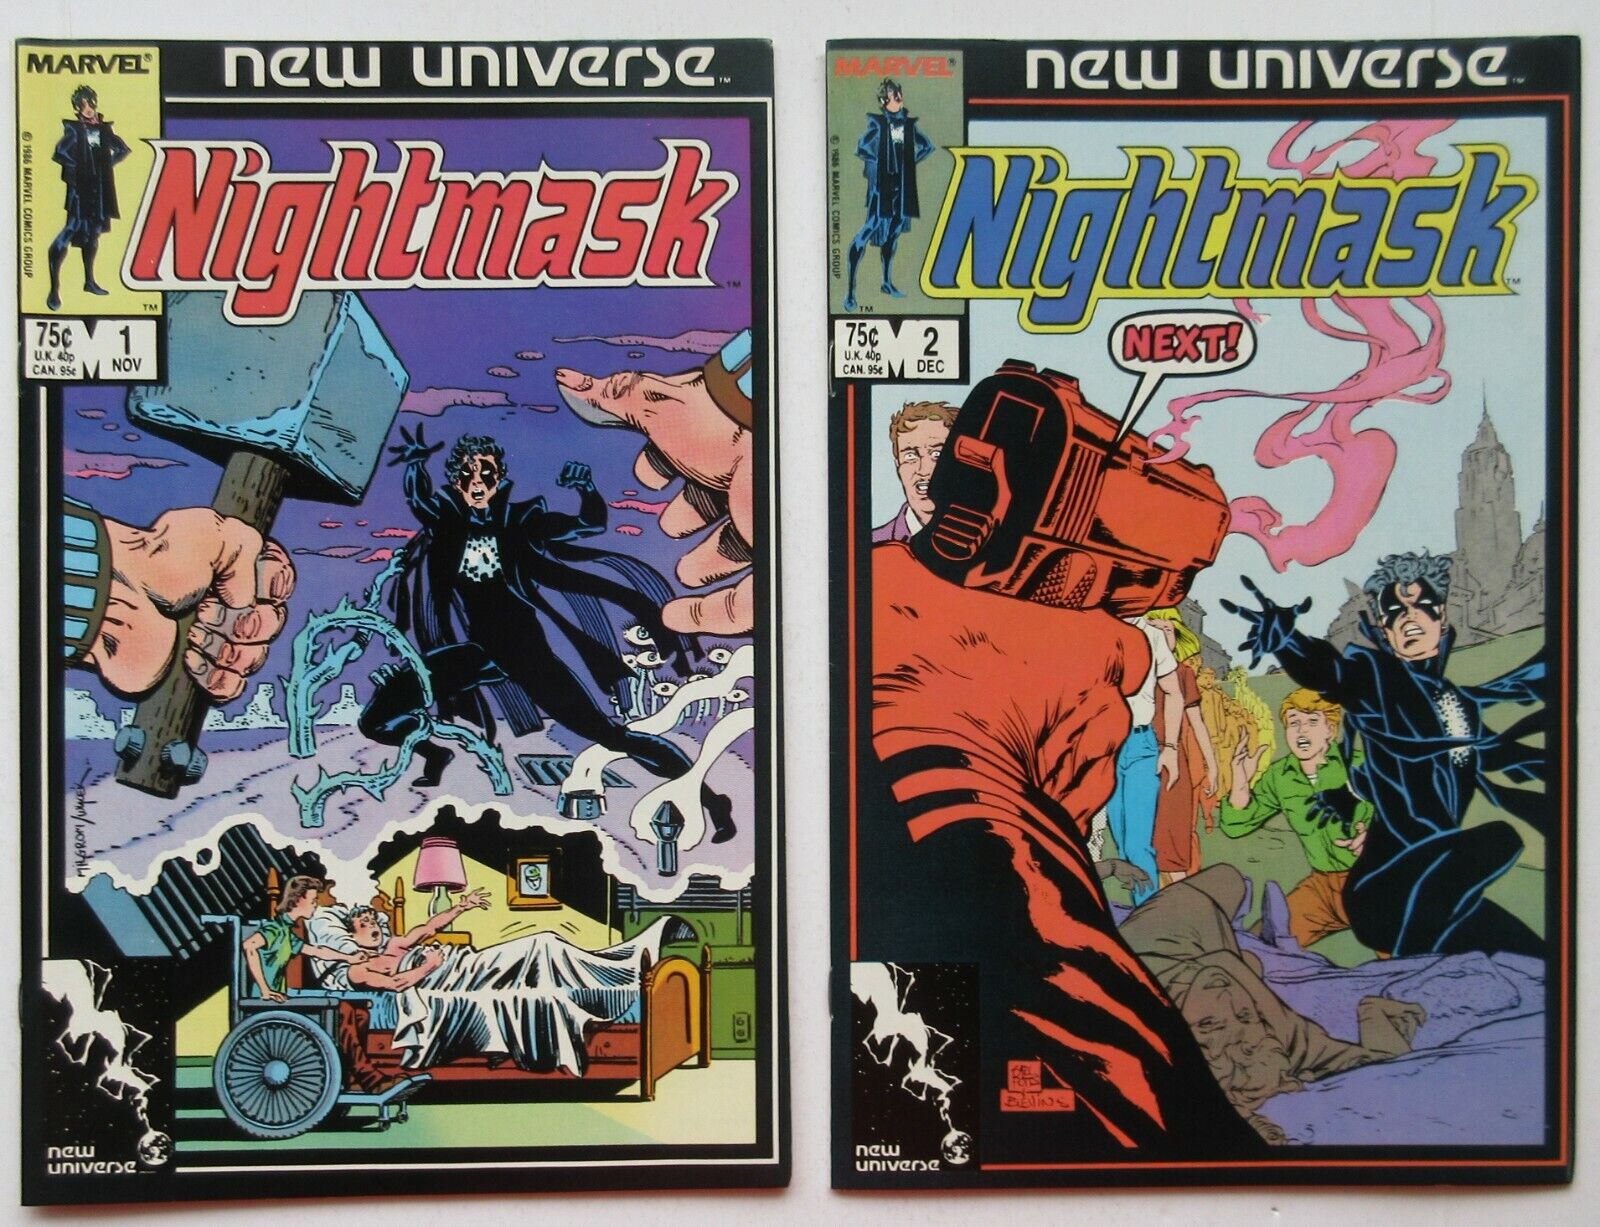 Marvel New Universe "Nightmask" Comic Books #1 & #2 - 1986